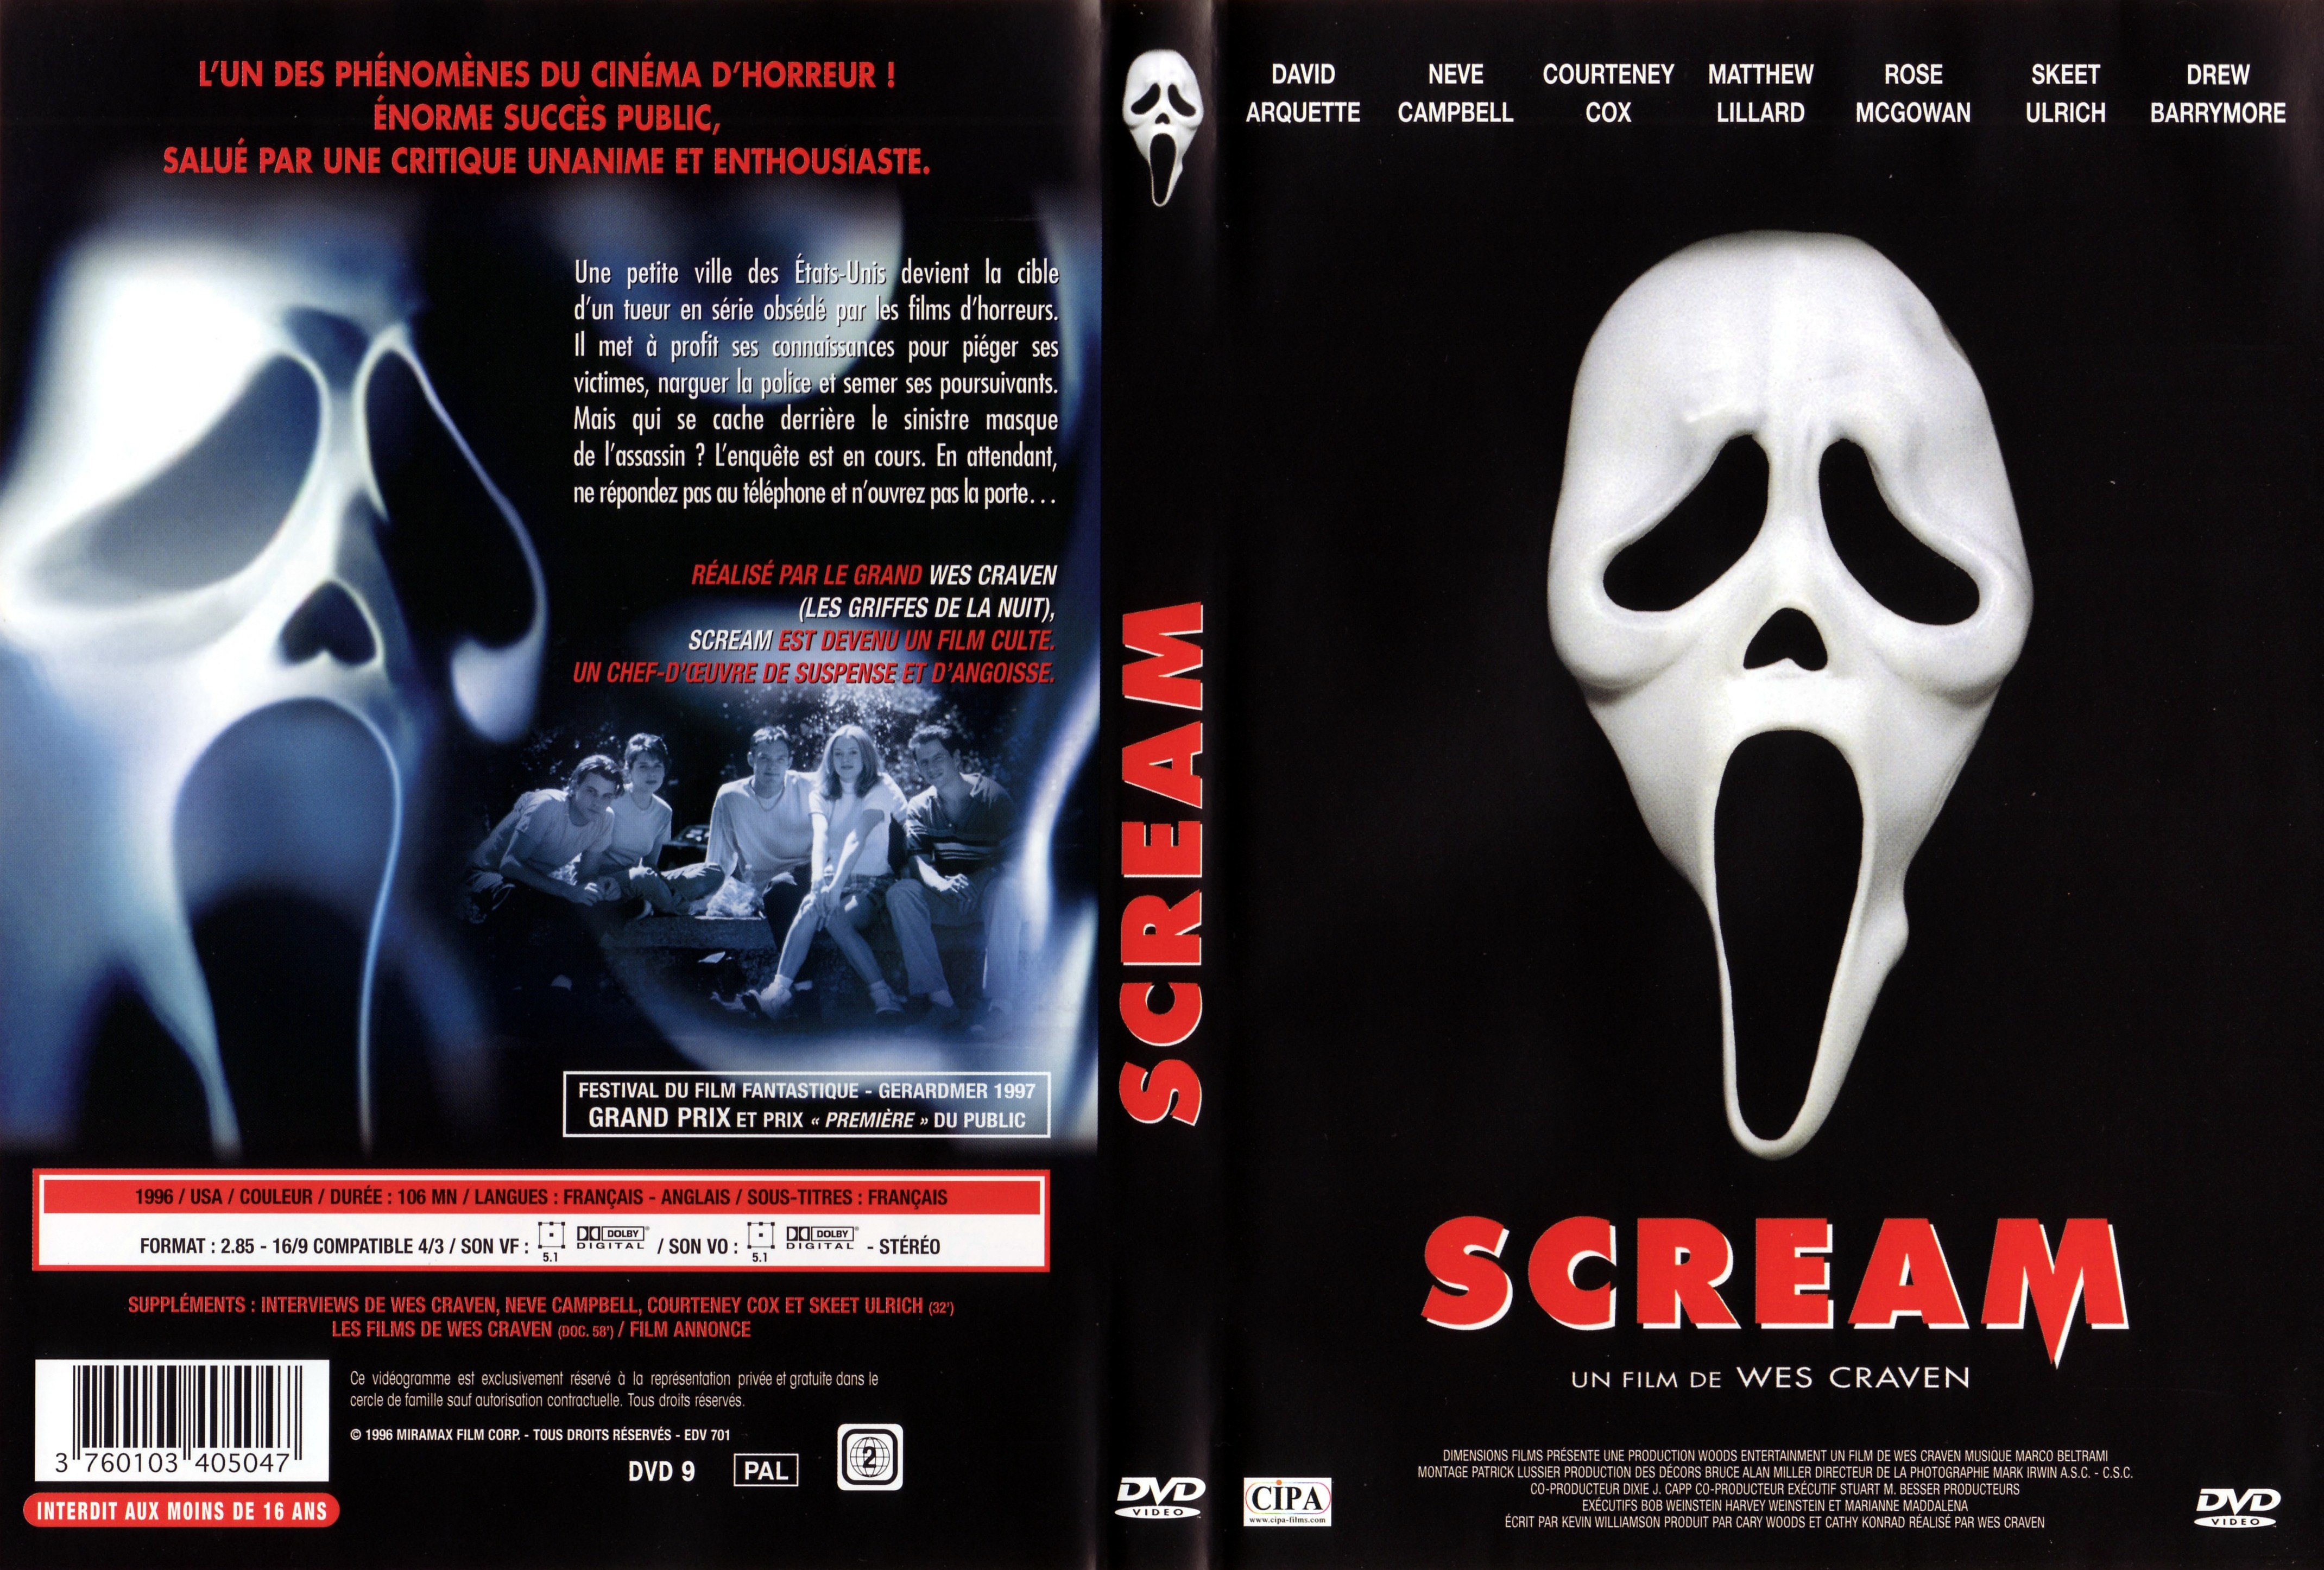 Jaquette DVD Scream v5